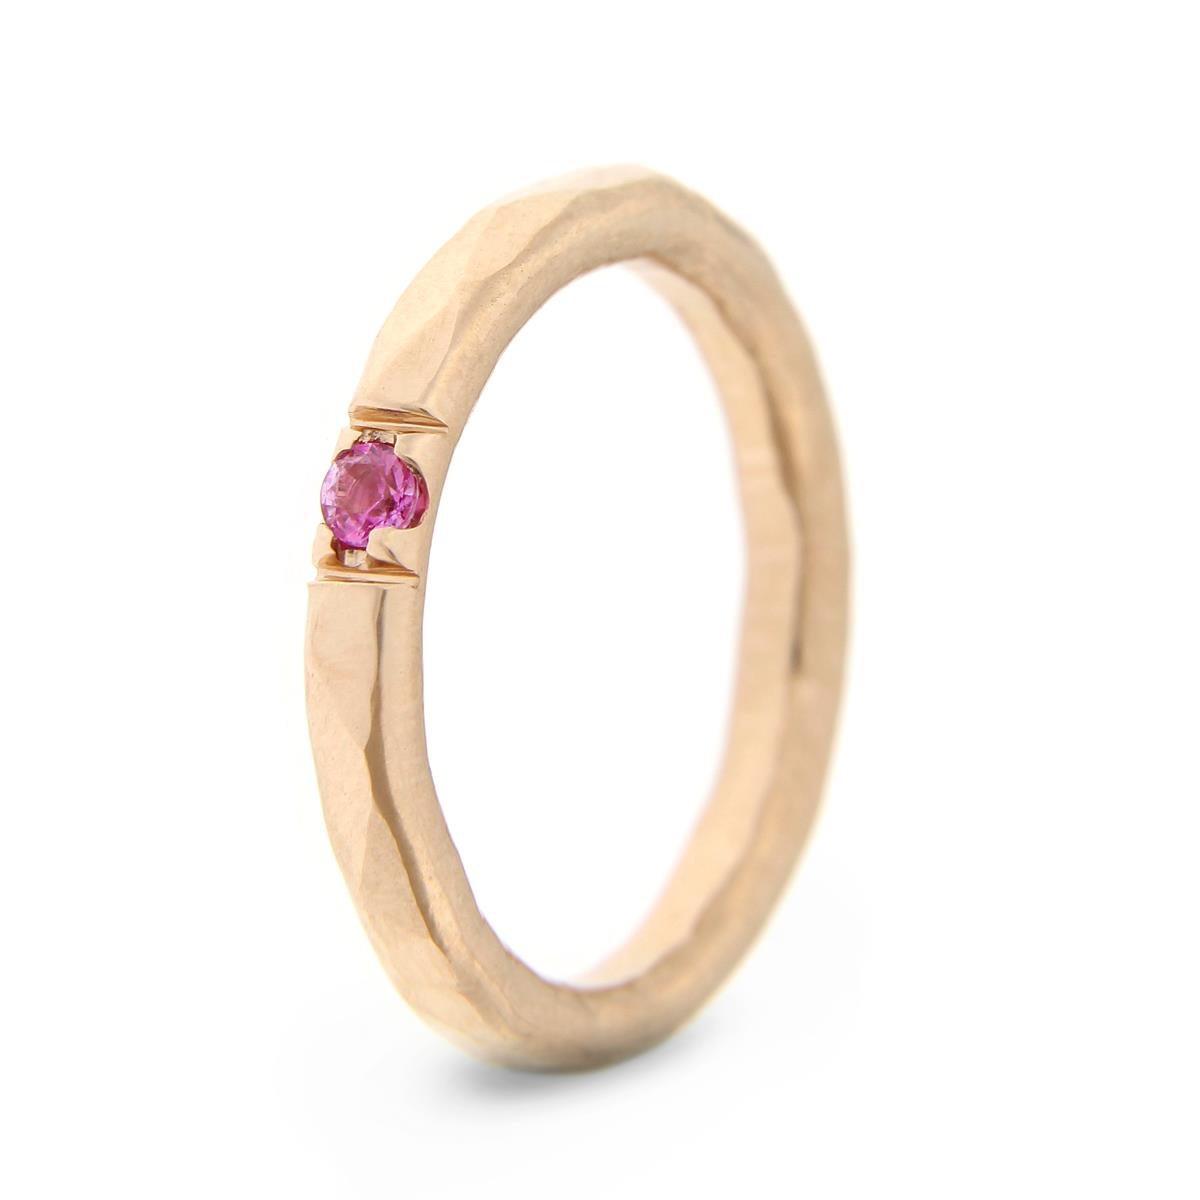 Katie g. Jewellery - Hammered Ring 2,5mm -  14kt. Roségold - rosa Saphir